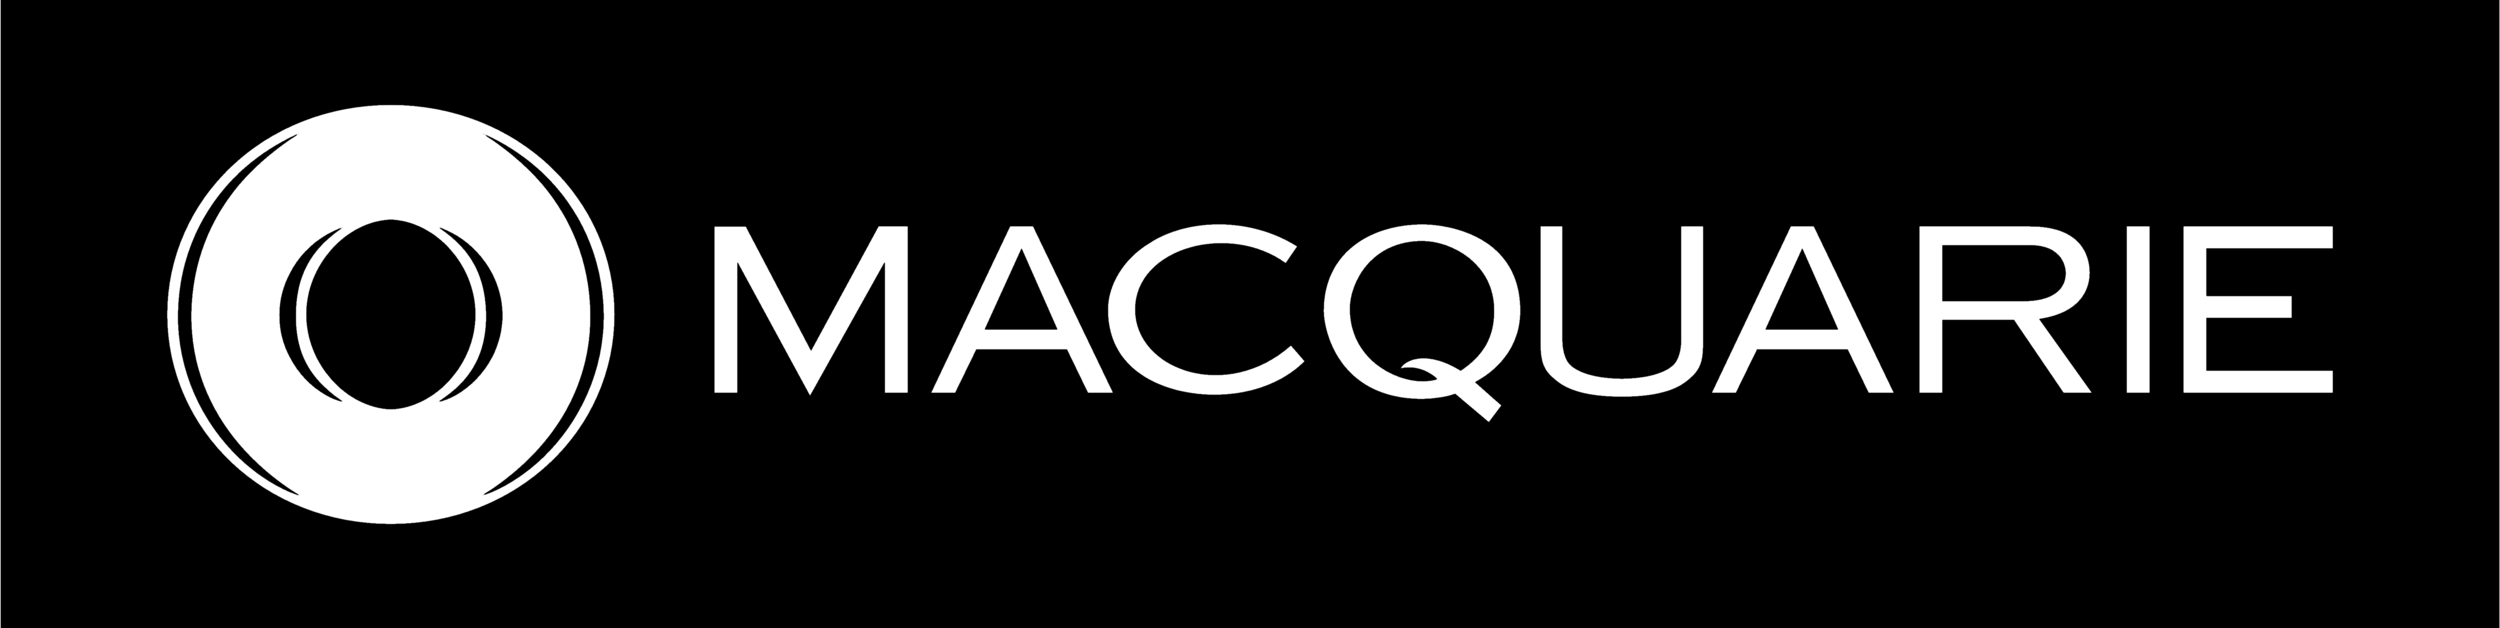 Macquarie_Group_logo_black.png